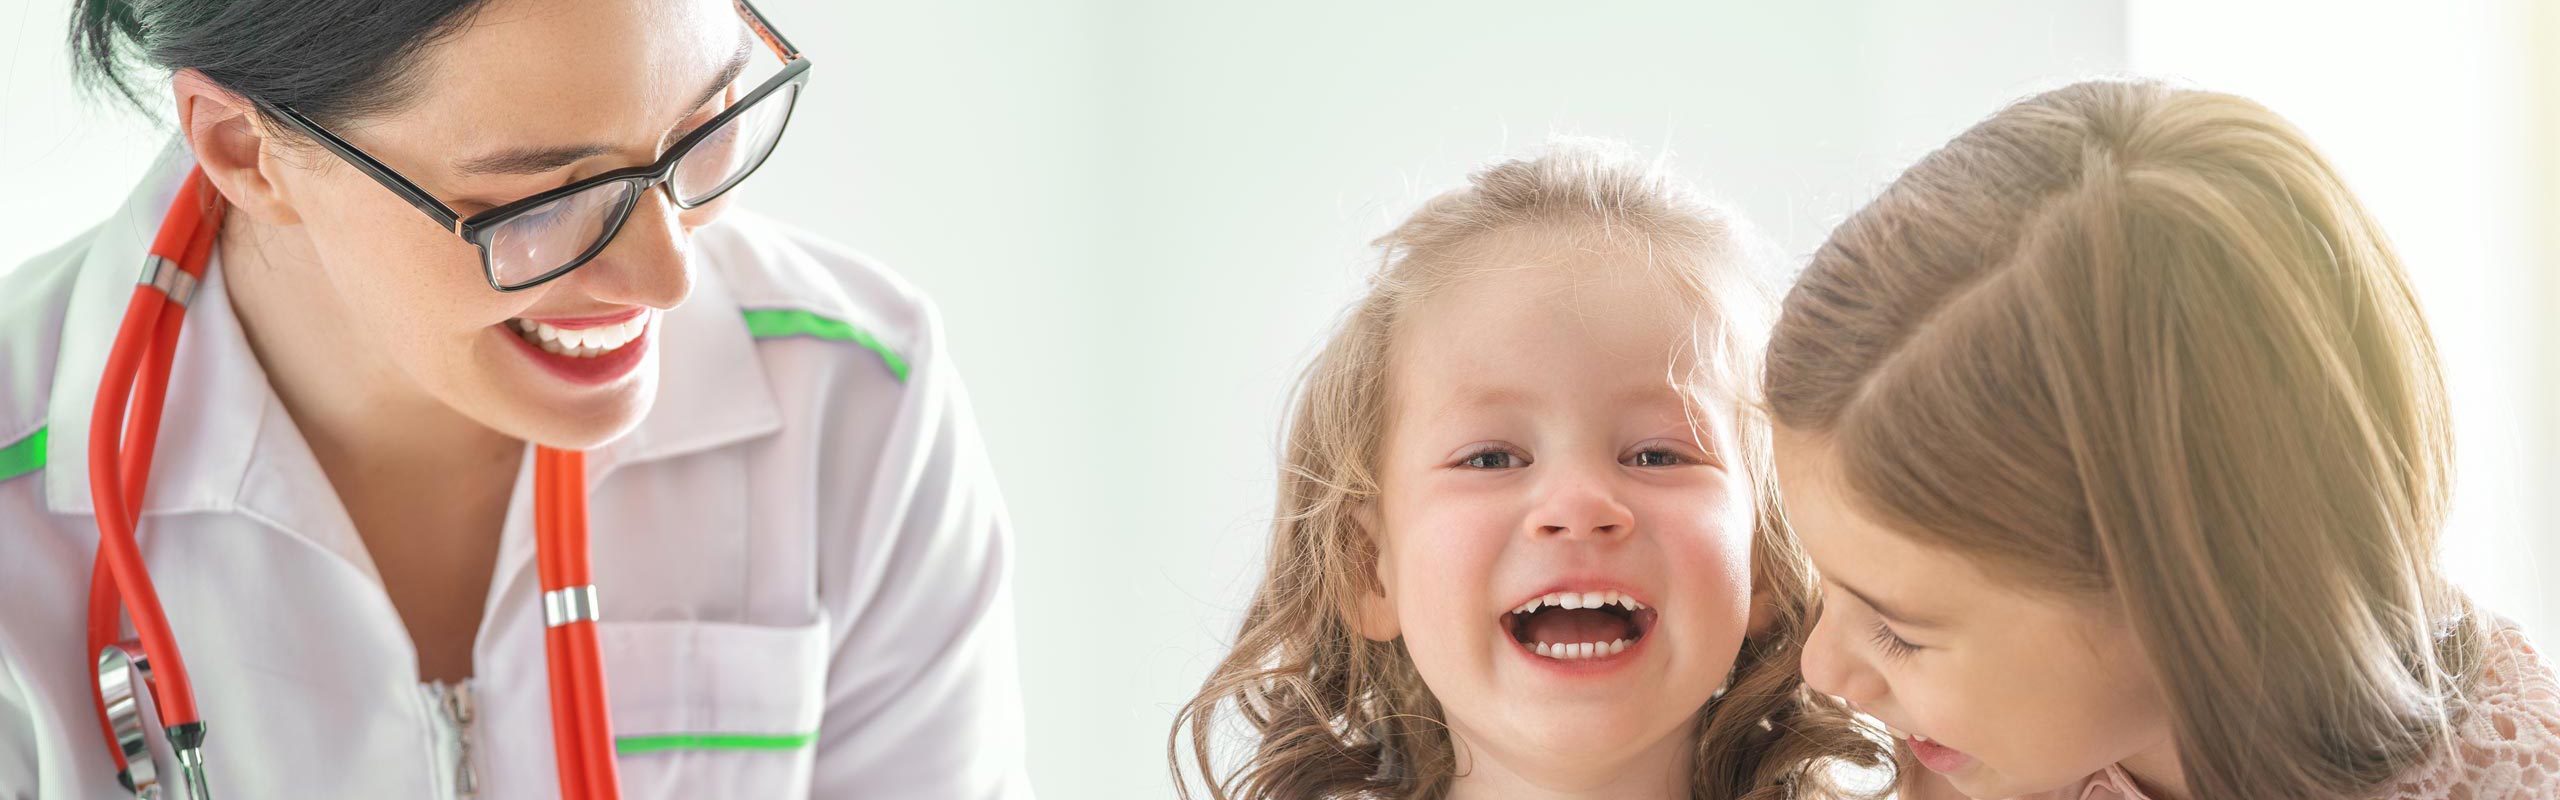 Kontaktformular - Kinderarzt Hardheim | Praxis für Kinder- und Jugendmedizin